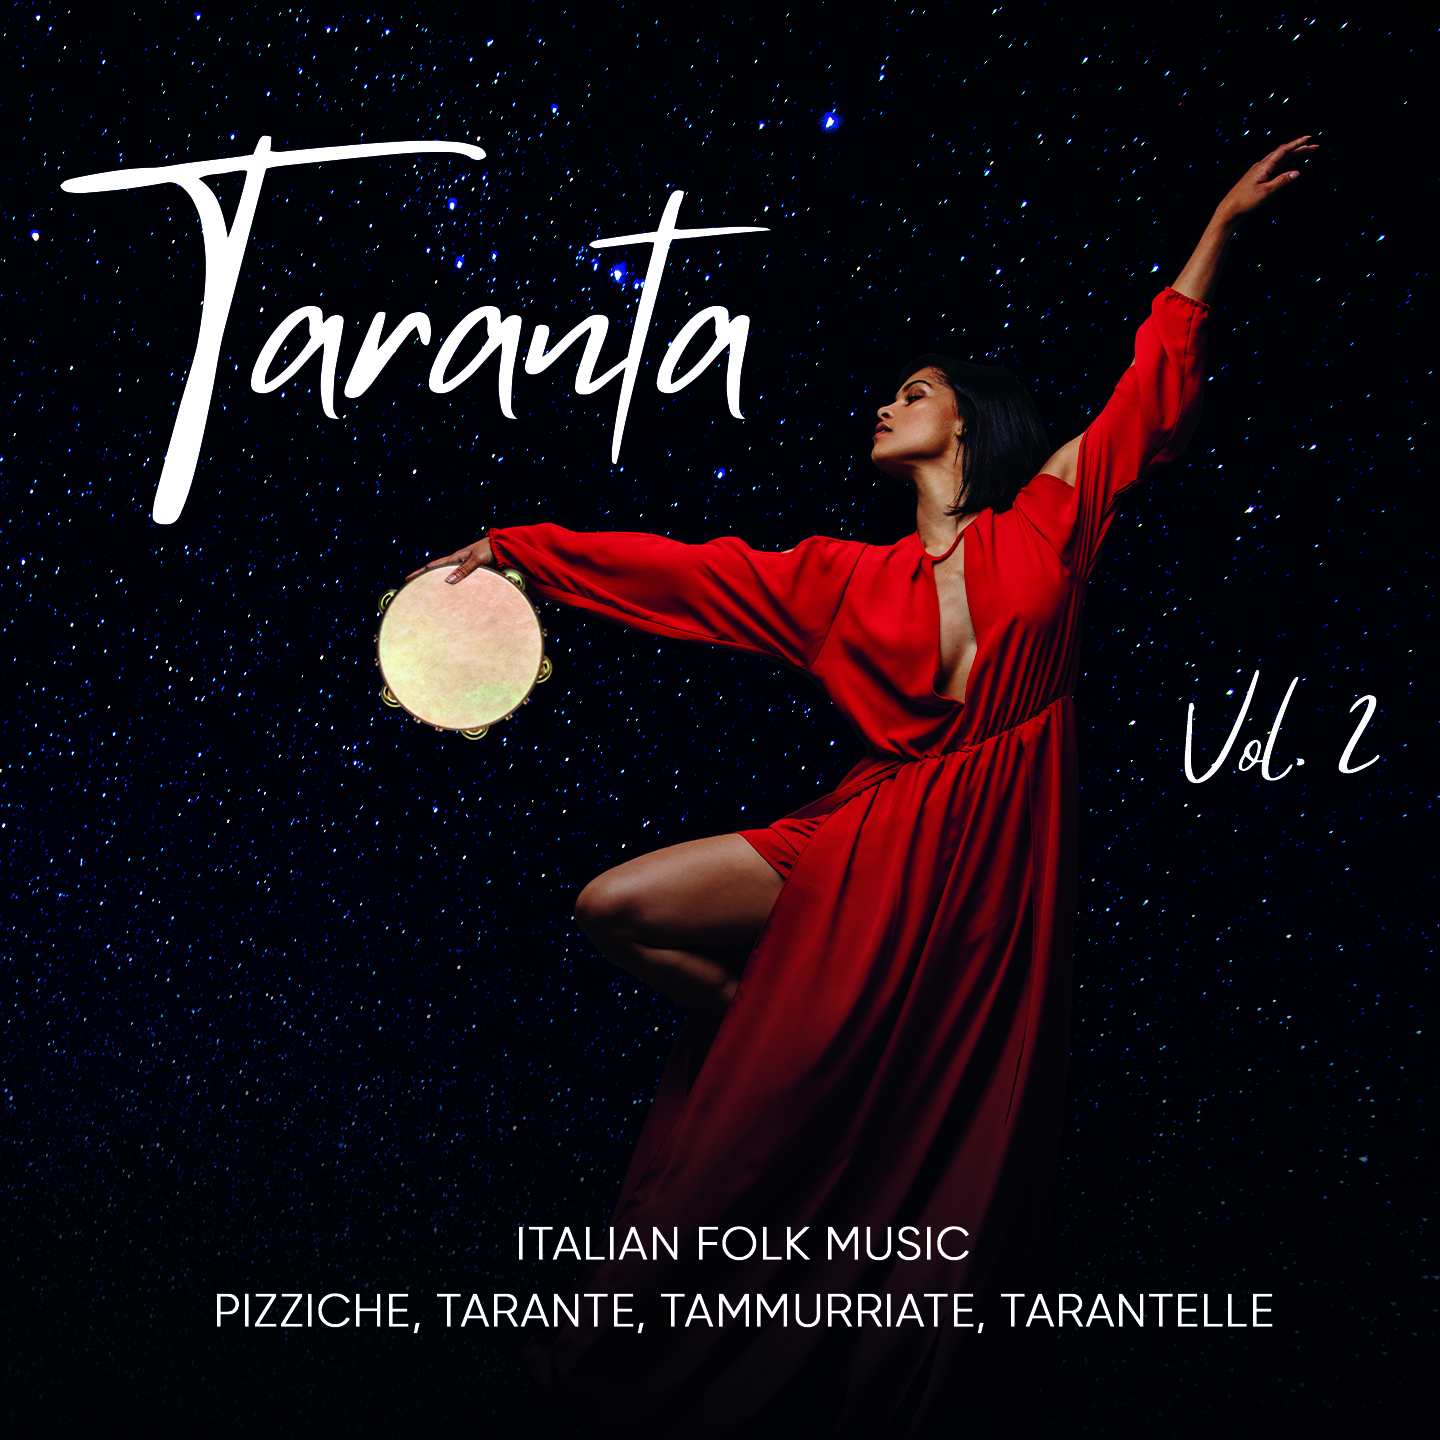 Taranta, Vol. 2: Italian Folk Music, Pizziche, Tarante, Tamurriate, Tarantelle